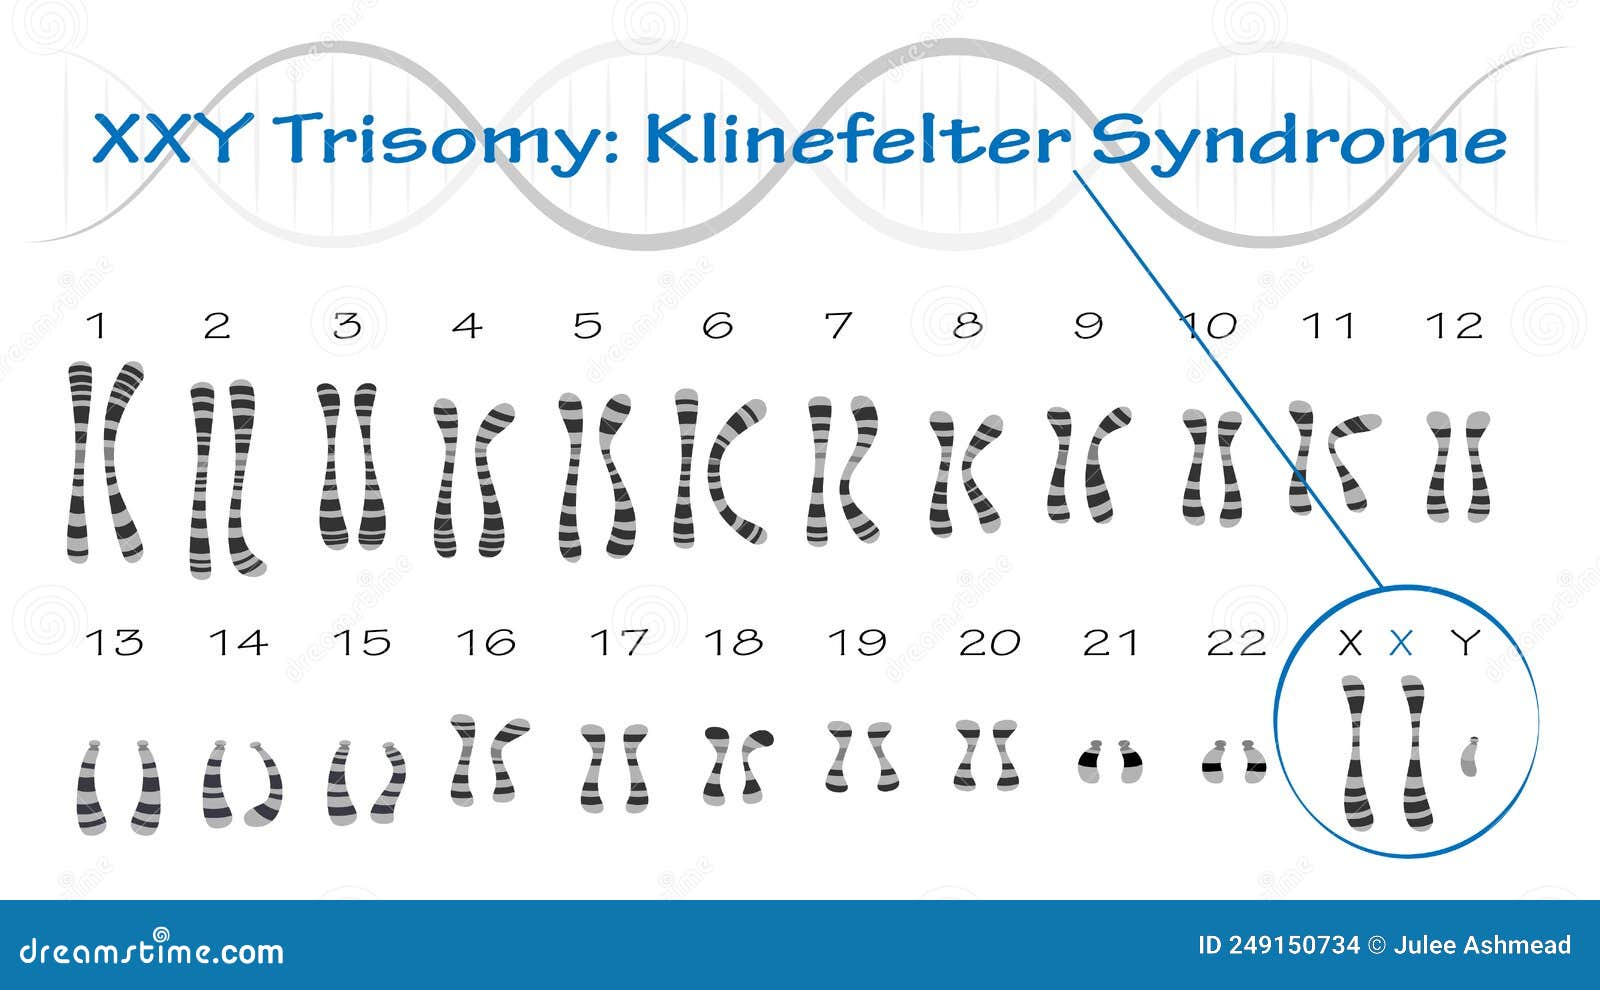 Klinefelter Syndrome Karyotype Vector Illustration Xxy Trisomy Stock